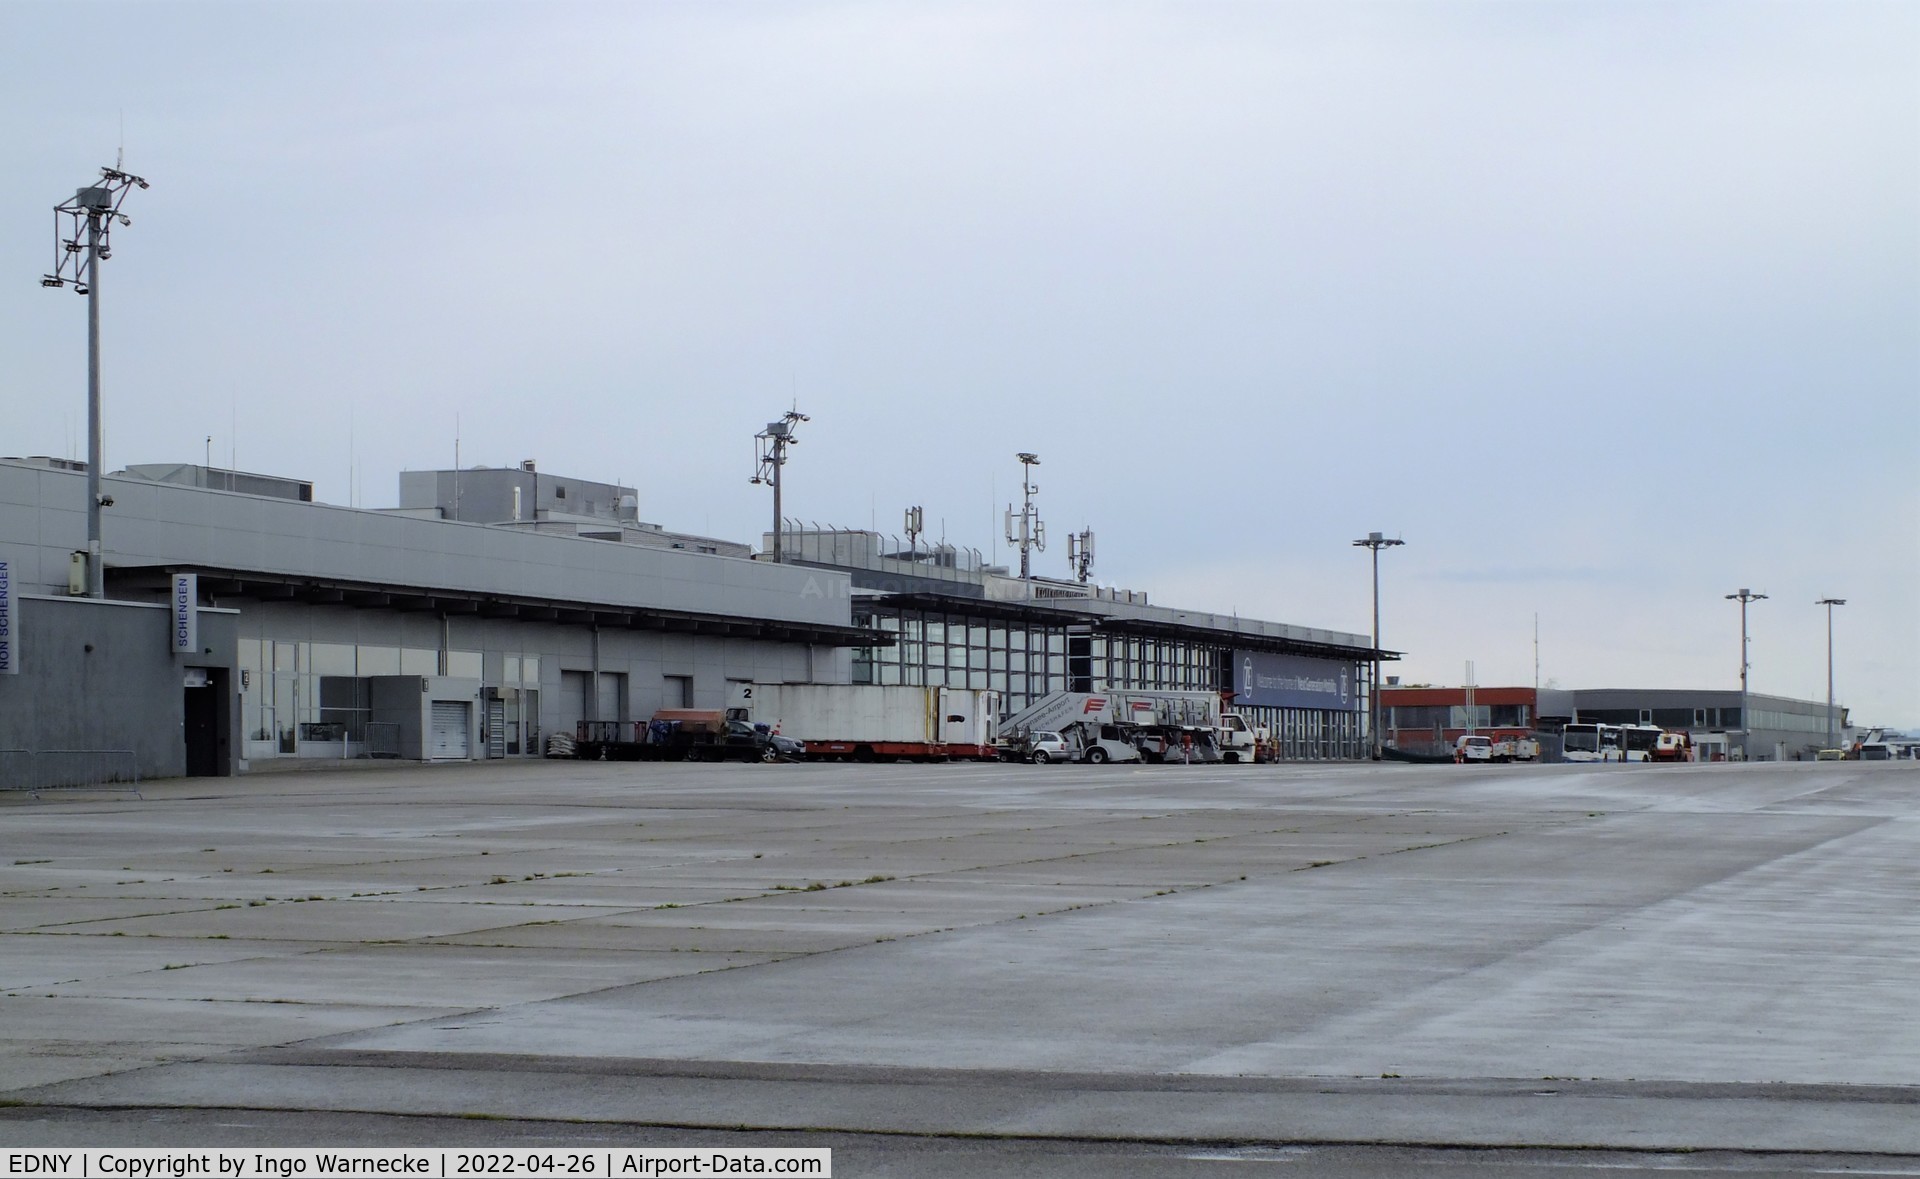 Bodensee Airport, Friedrichshafen Germany (EDNY) - airside view of the new terminal at Friedrichshafen Bodensee airport